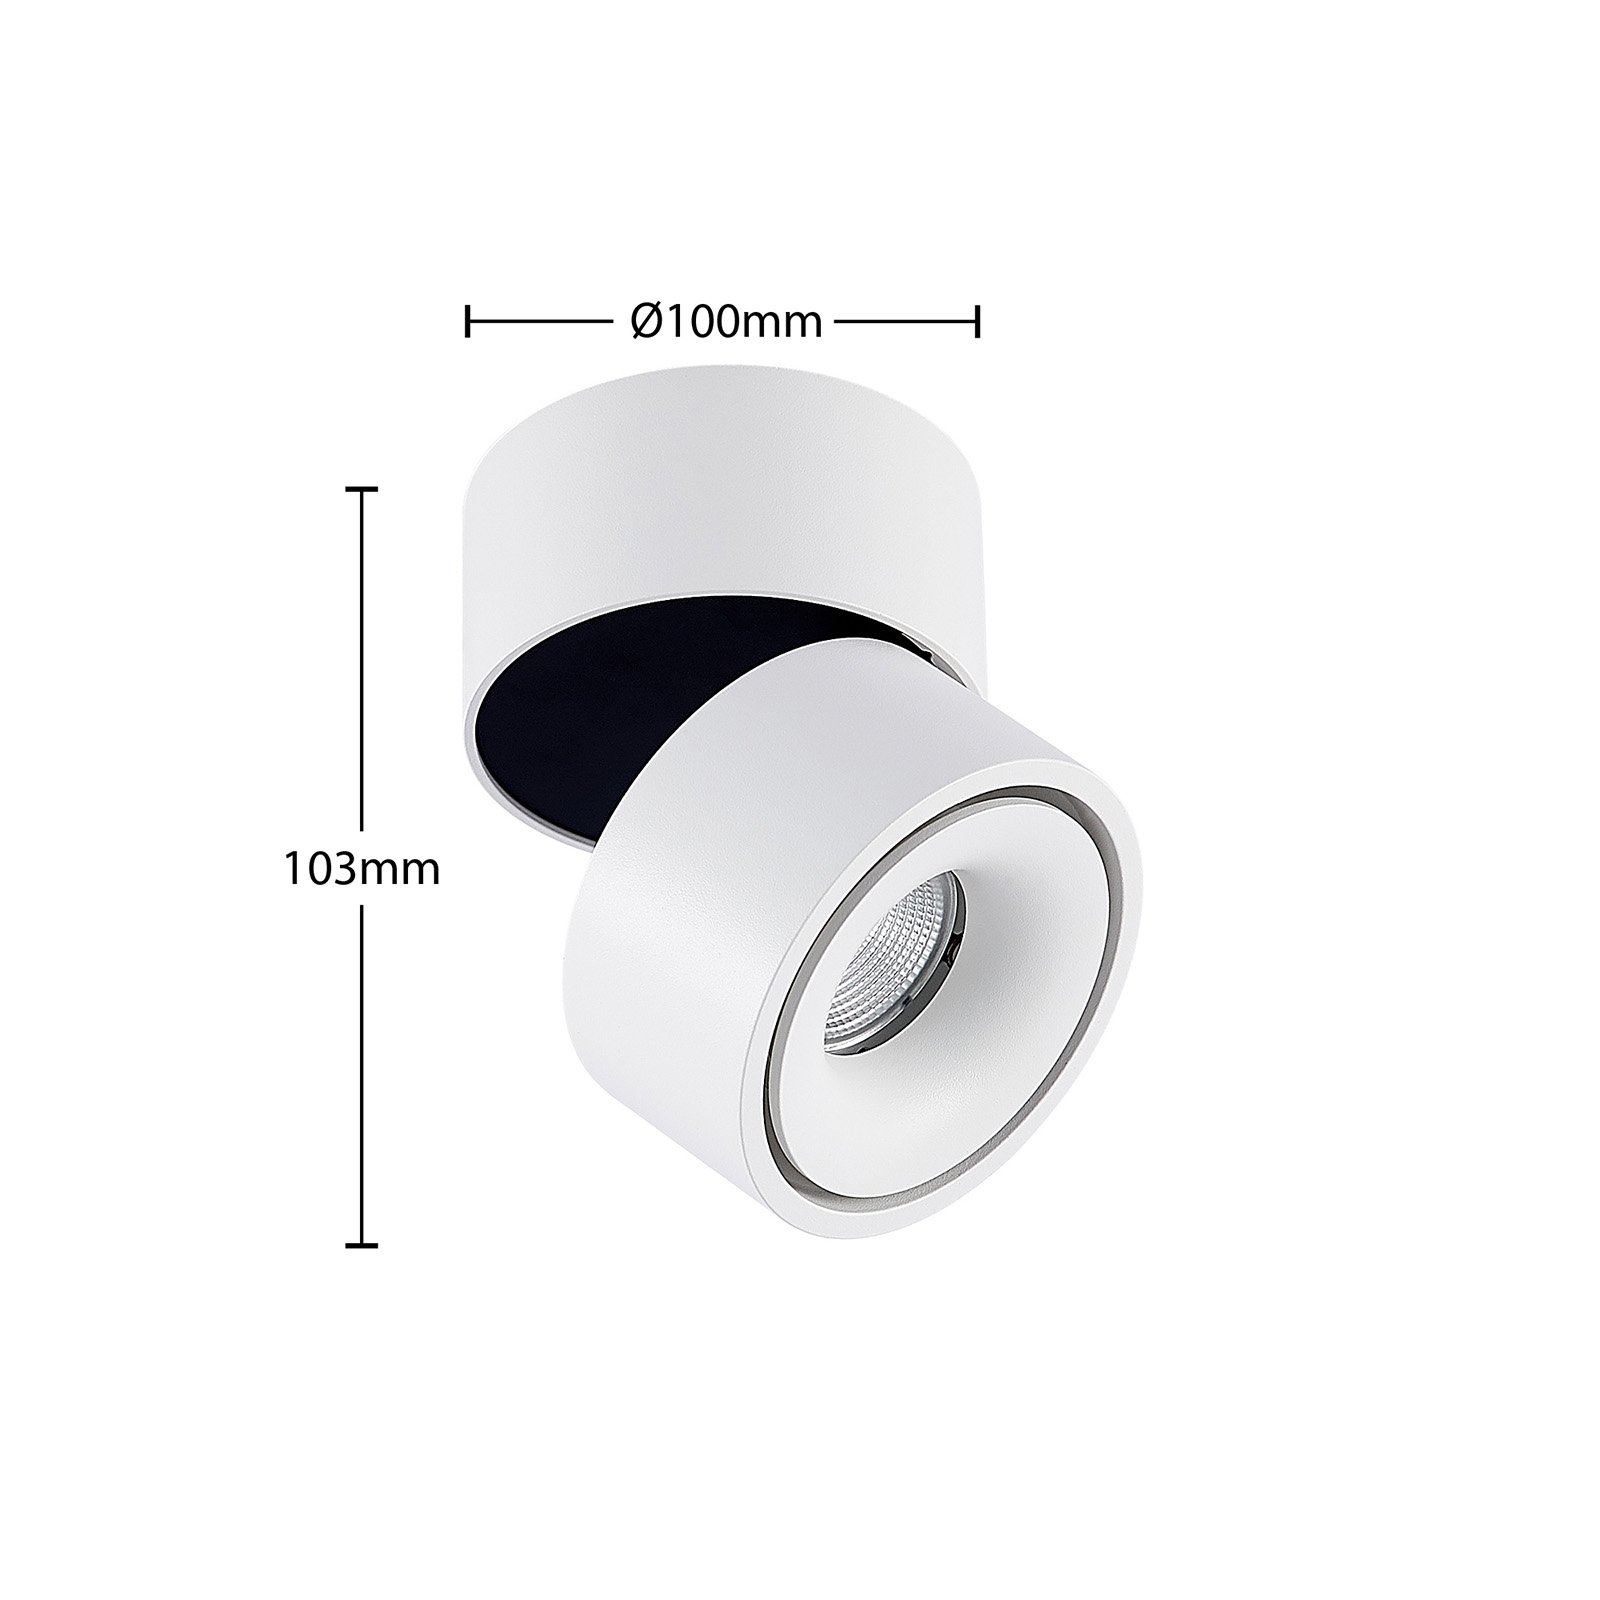 Arcchio Rotari LED-takspotlight 1 lampa 8,9W